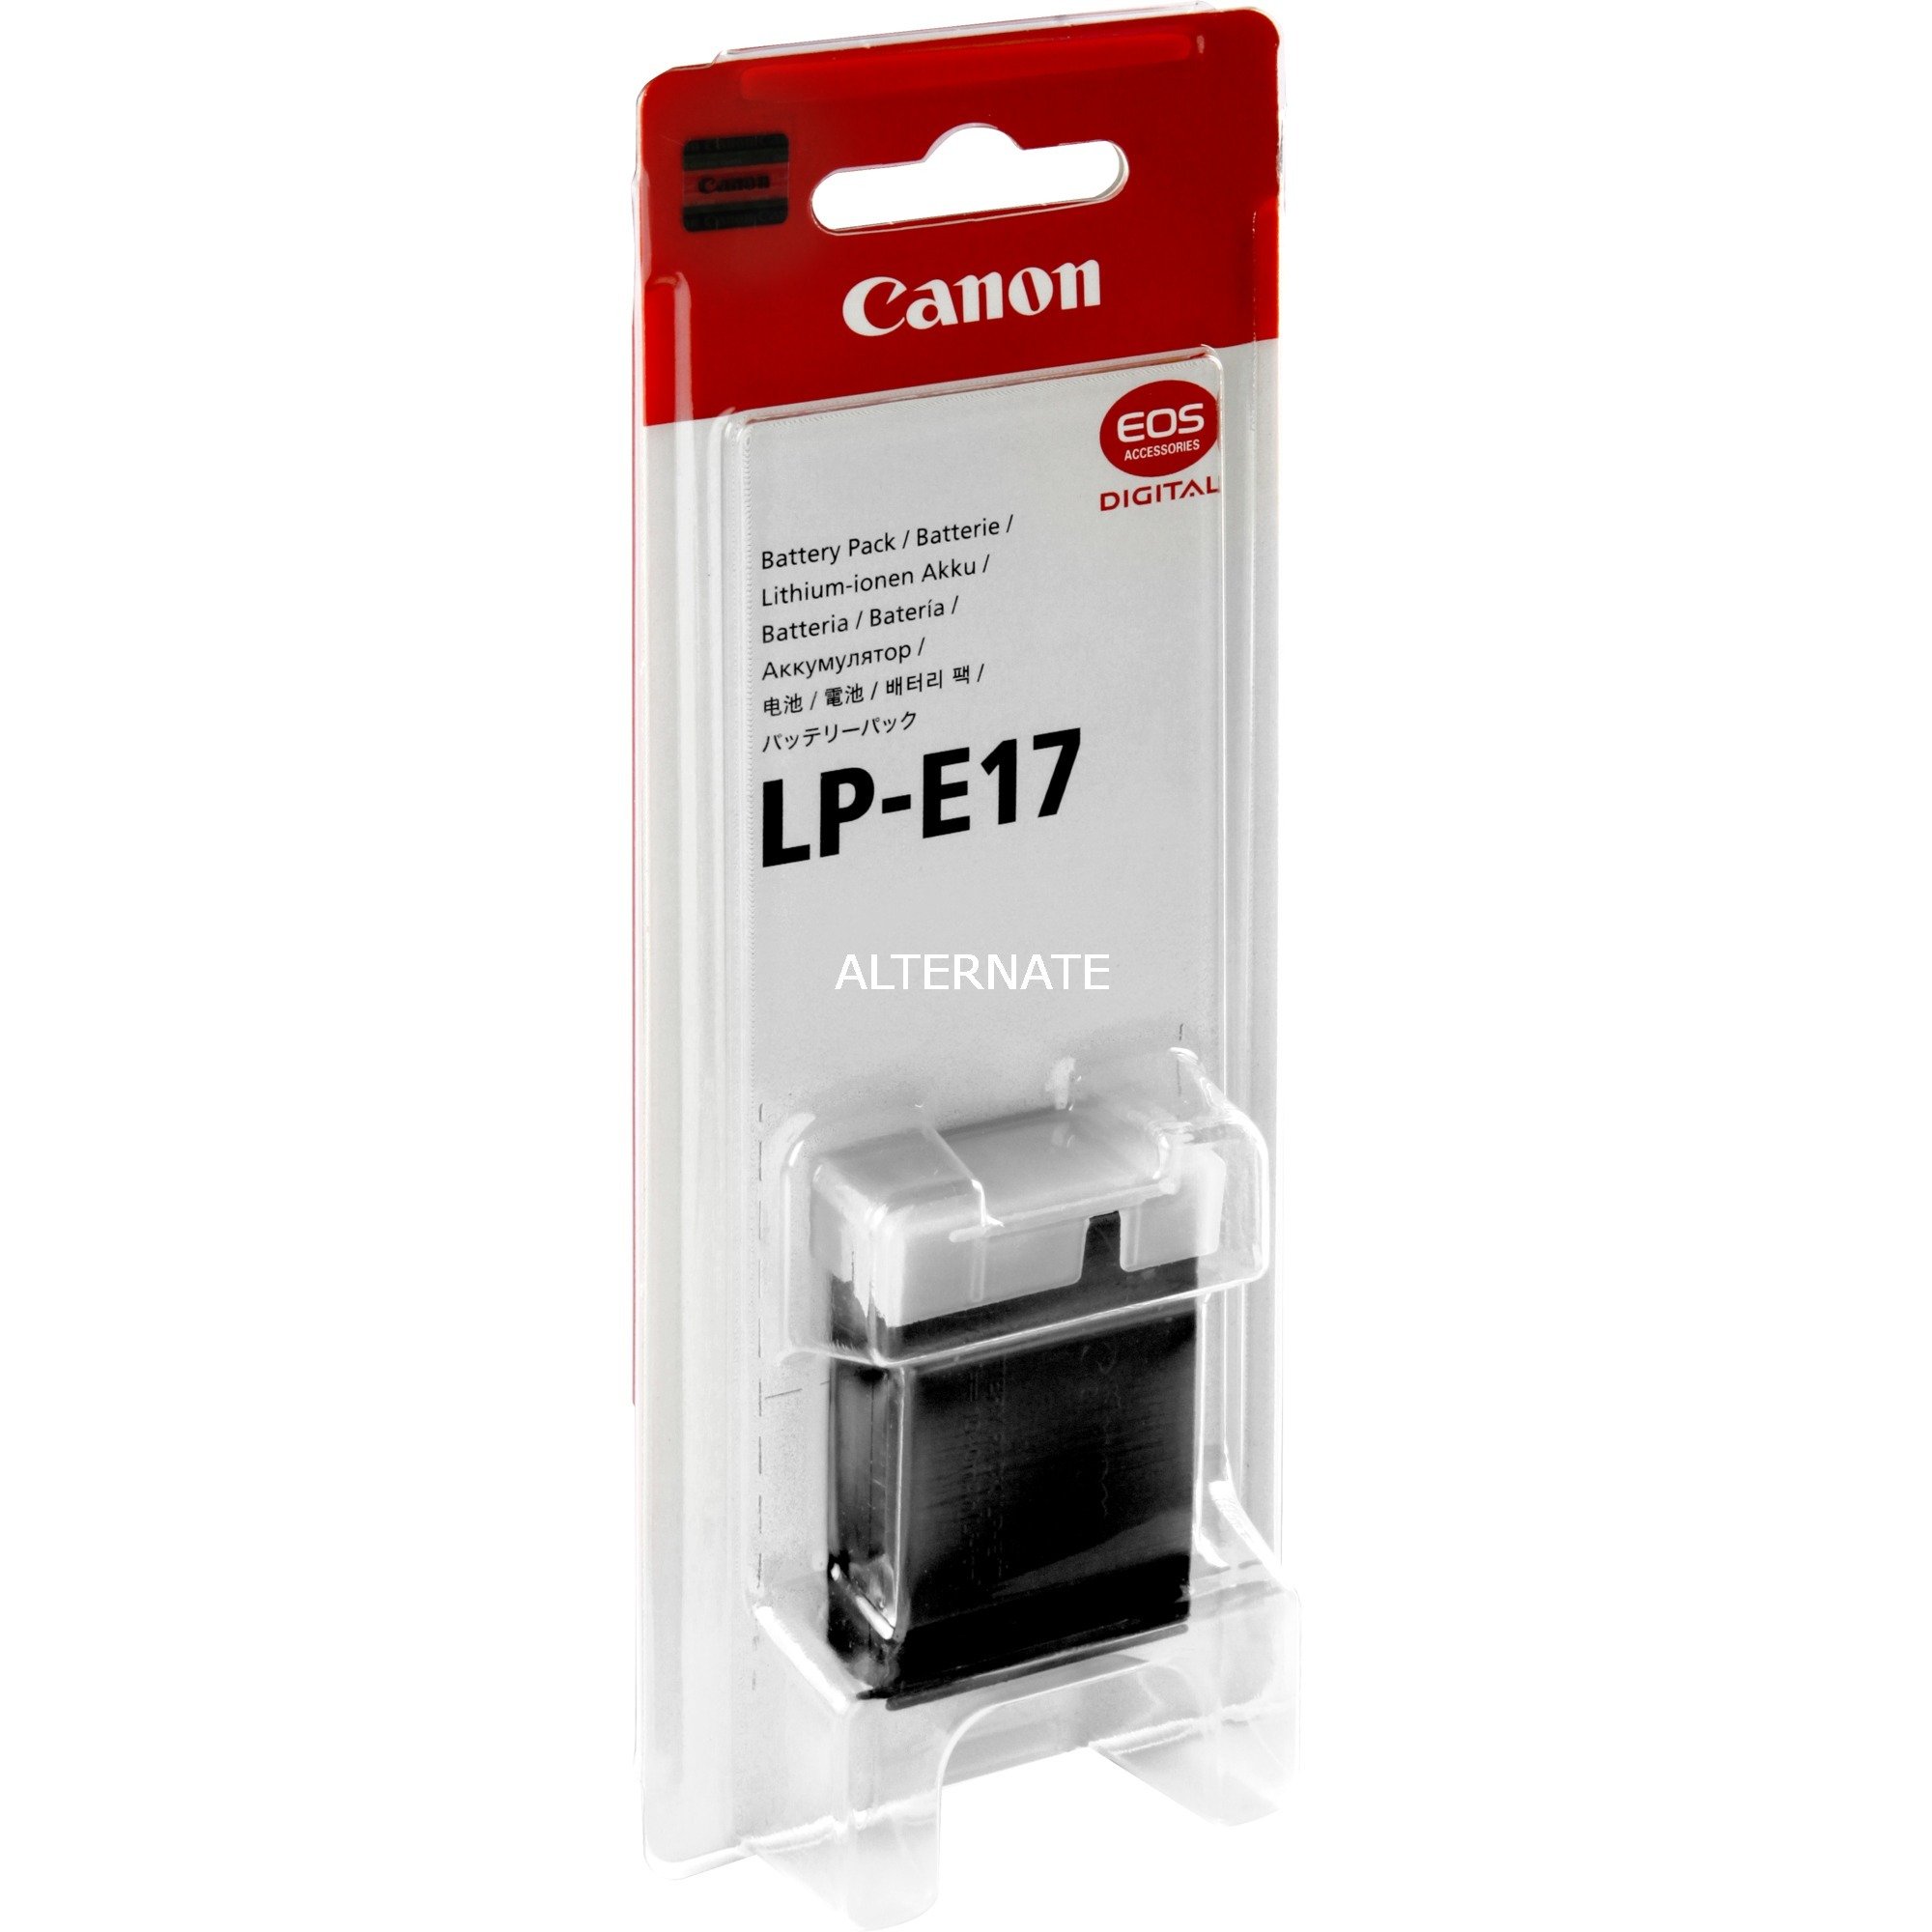 Canon battery. Аккумулятор Canon LP-e17. Canon Battery Pack LP-e17 7.2v 1040 Mah li-ion. Canon LP-e17 Original. Canon Rp аккумулятор LP-e17.